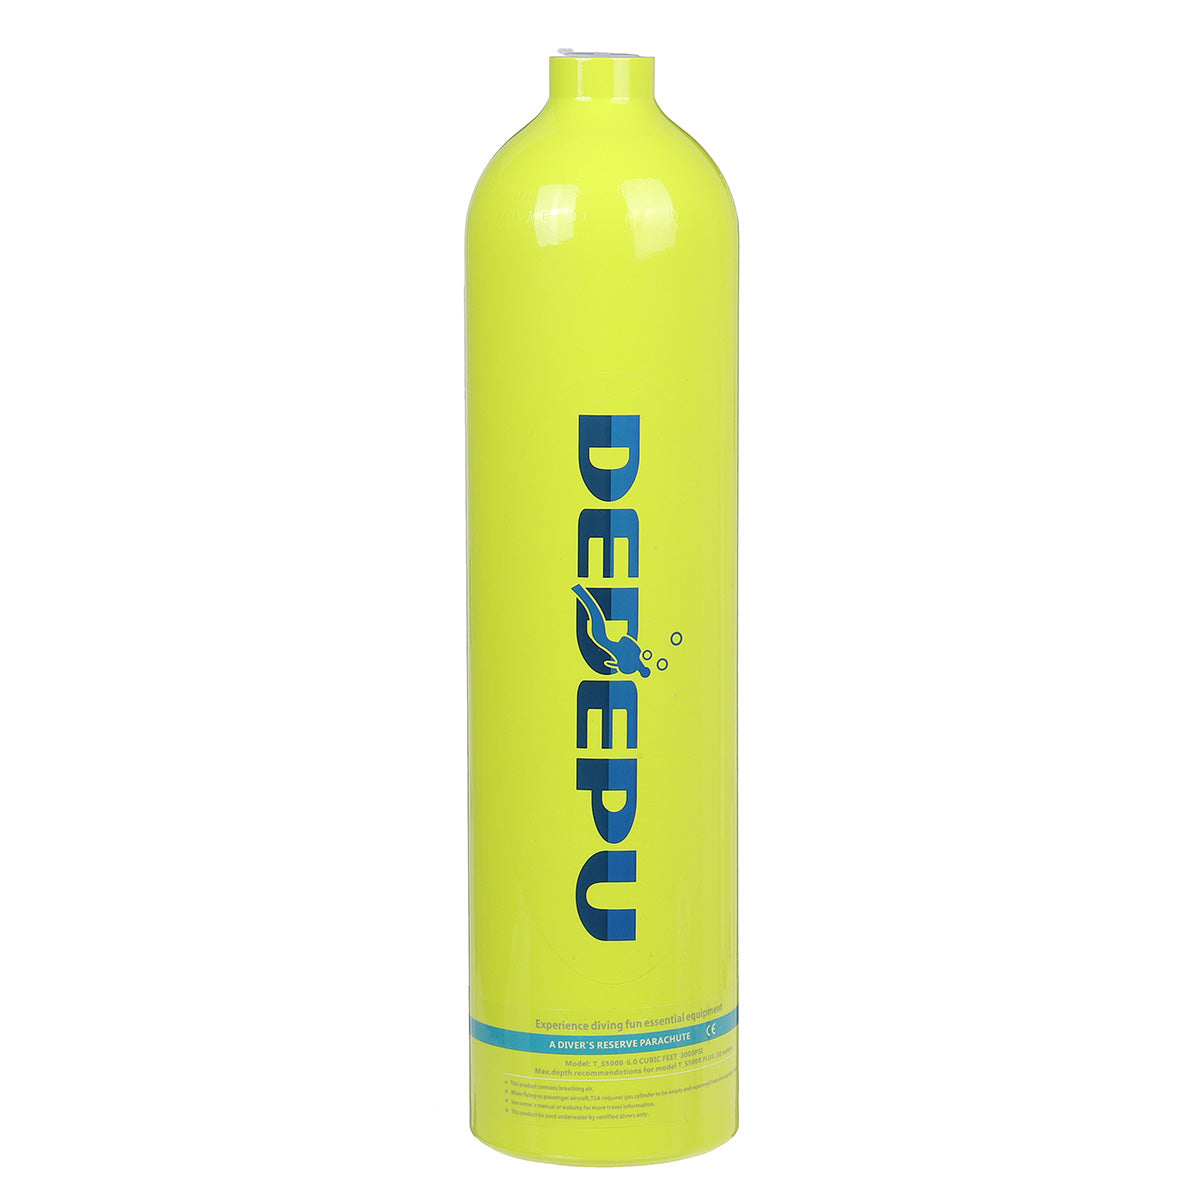 Green Yellow 1L Scuba Diving Oxygen Cylinder Air Tank Breathing Valve Diving Equipment+Bag